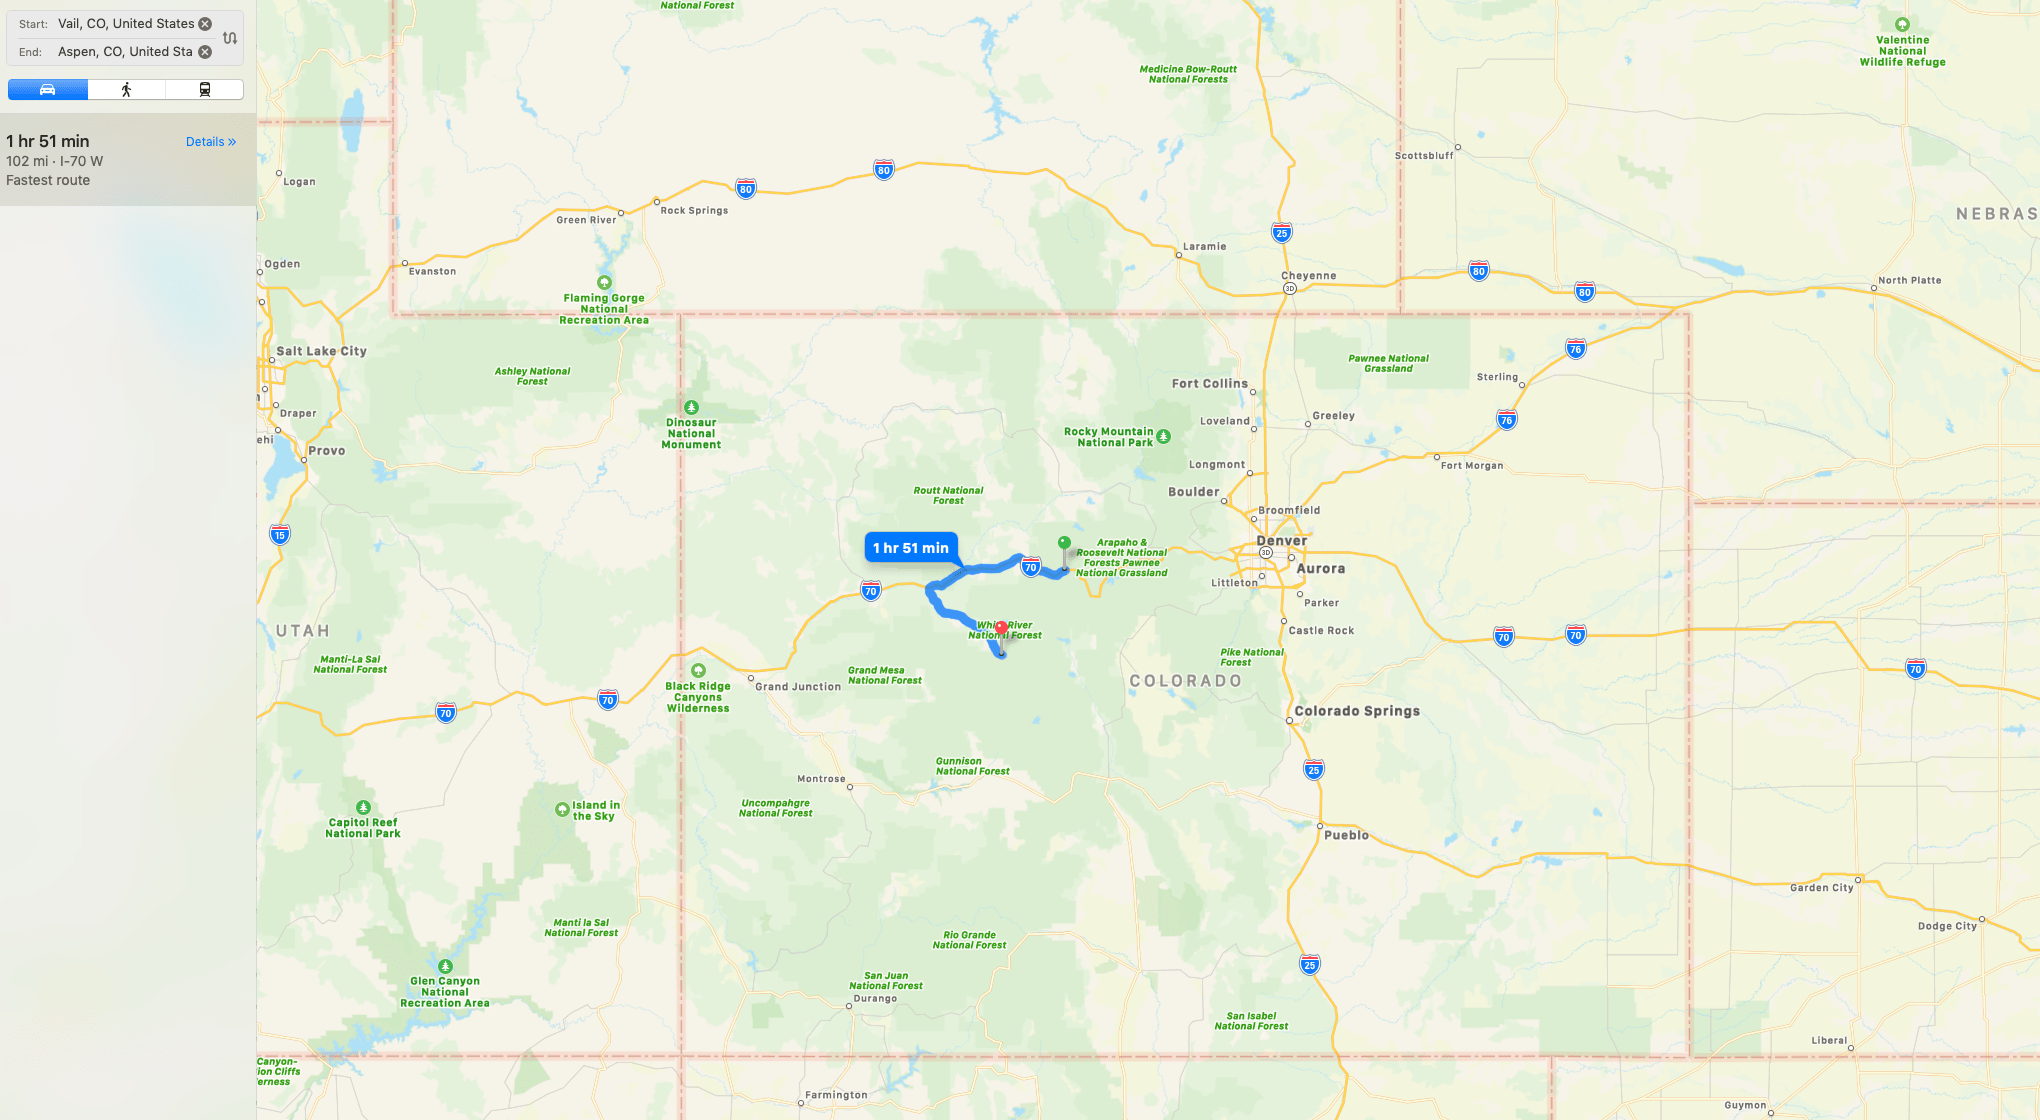 American Airlines, Vail, Aspen, Colorado